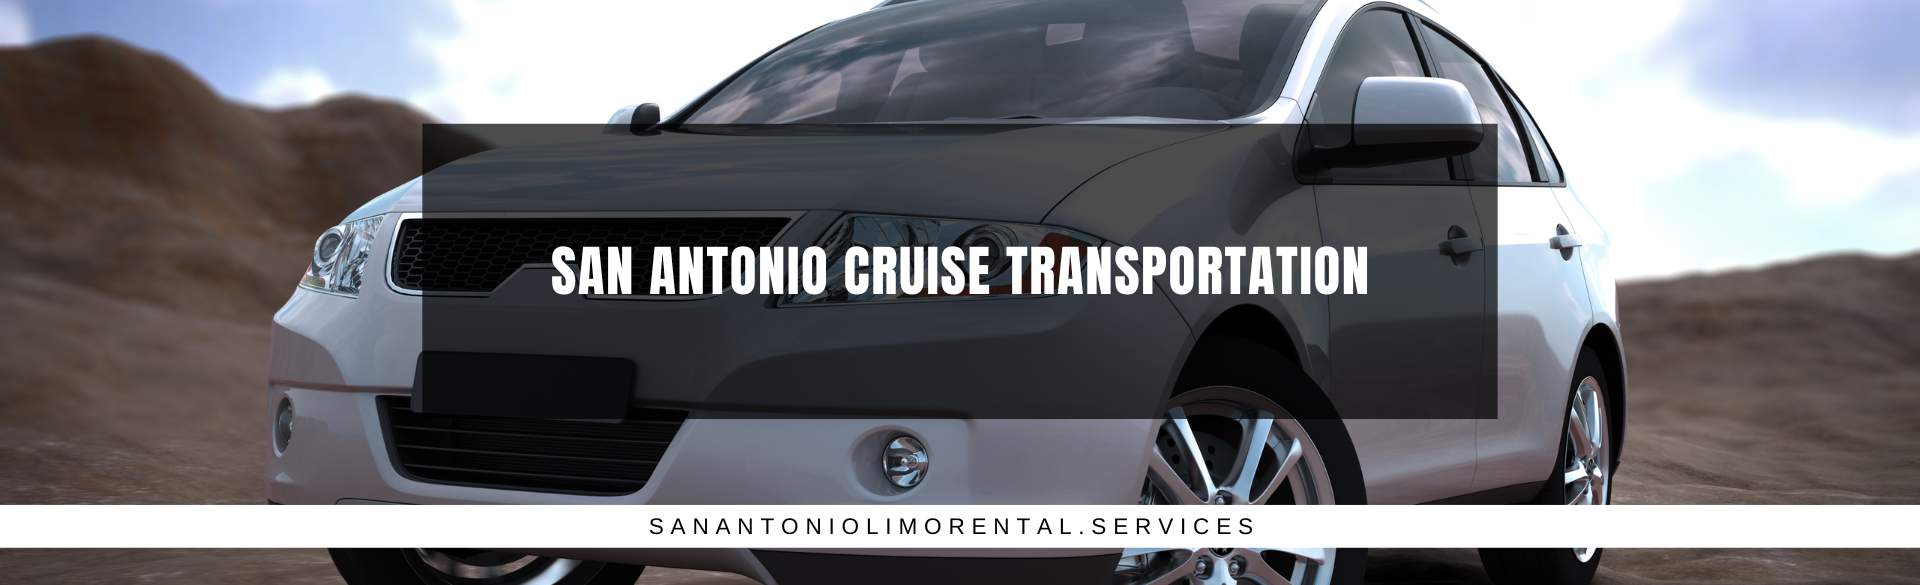 San Antonio Cruise Transportation